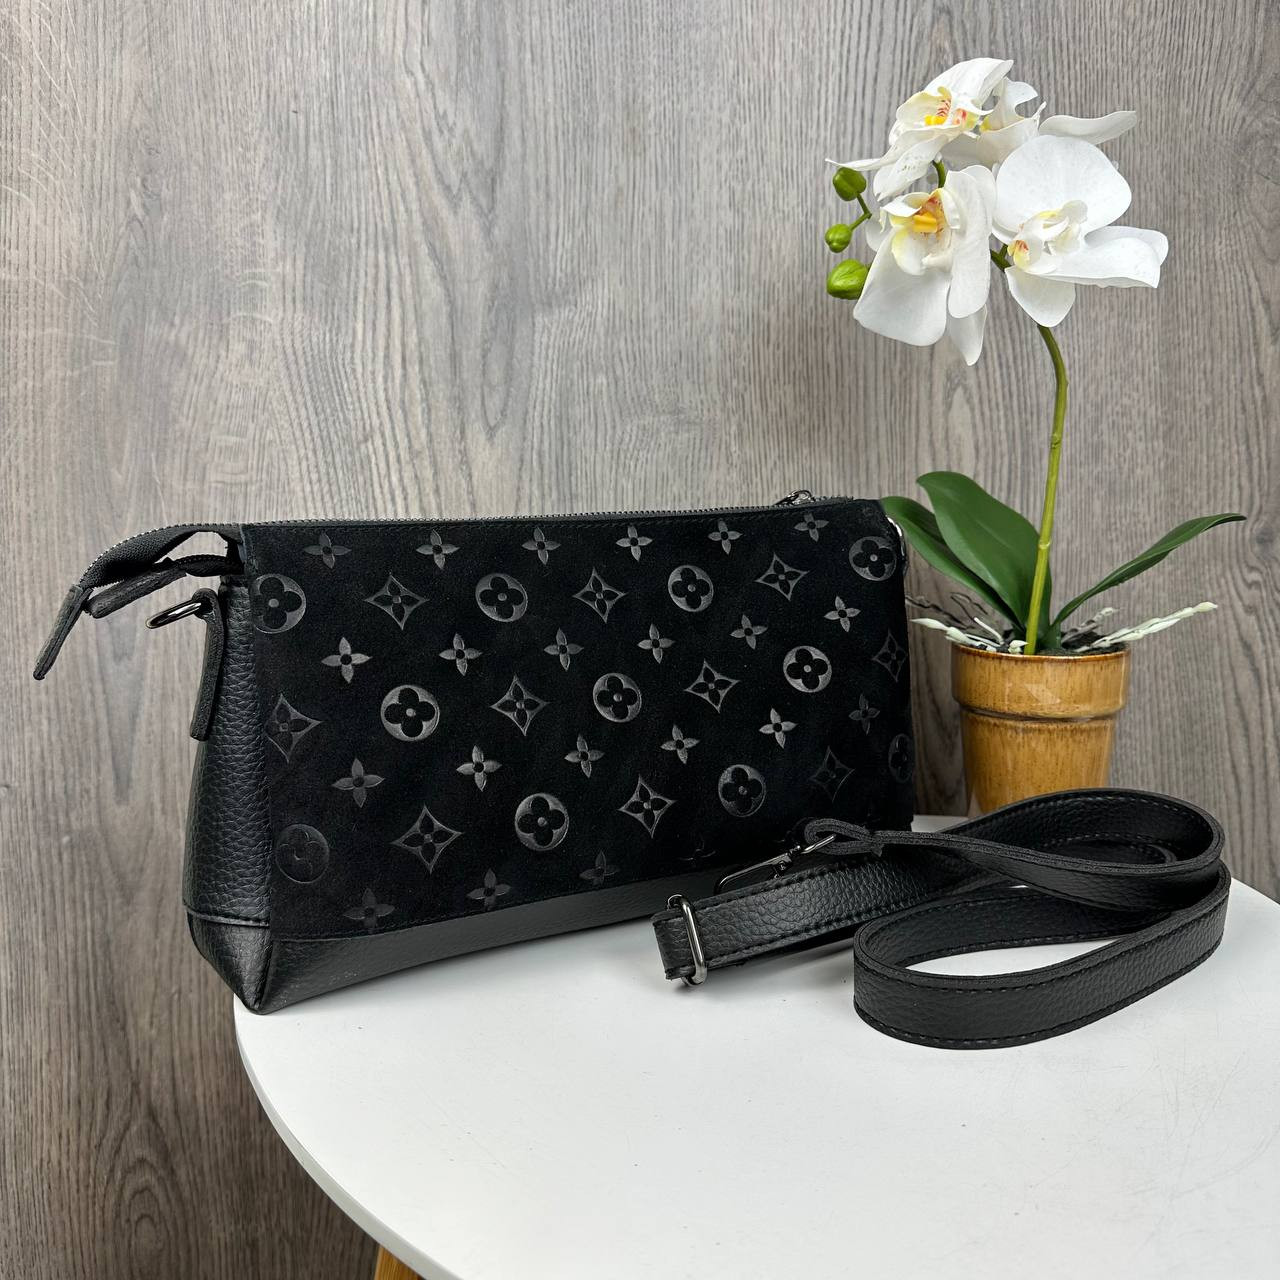 Жіноча сумка замшева клатч на плече стиль Луї Вітон, міні сумка натуральна замша чорна